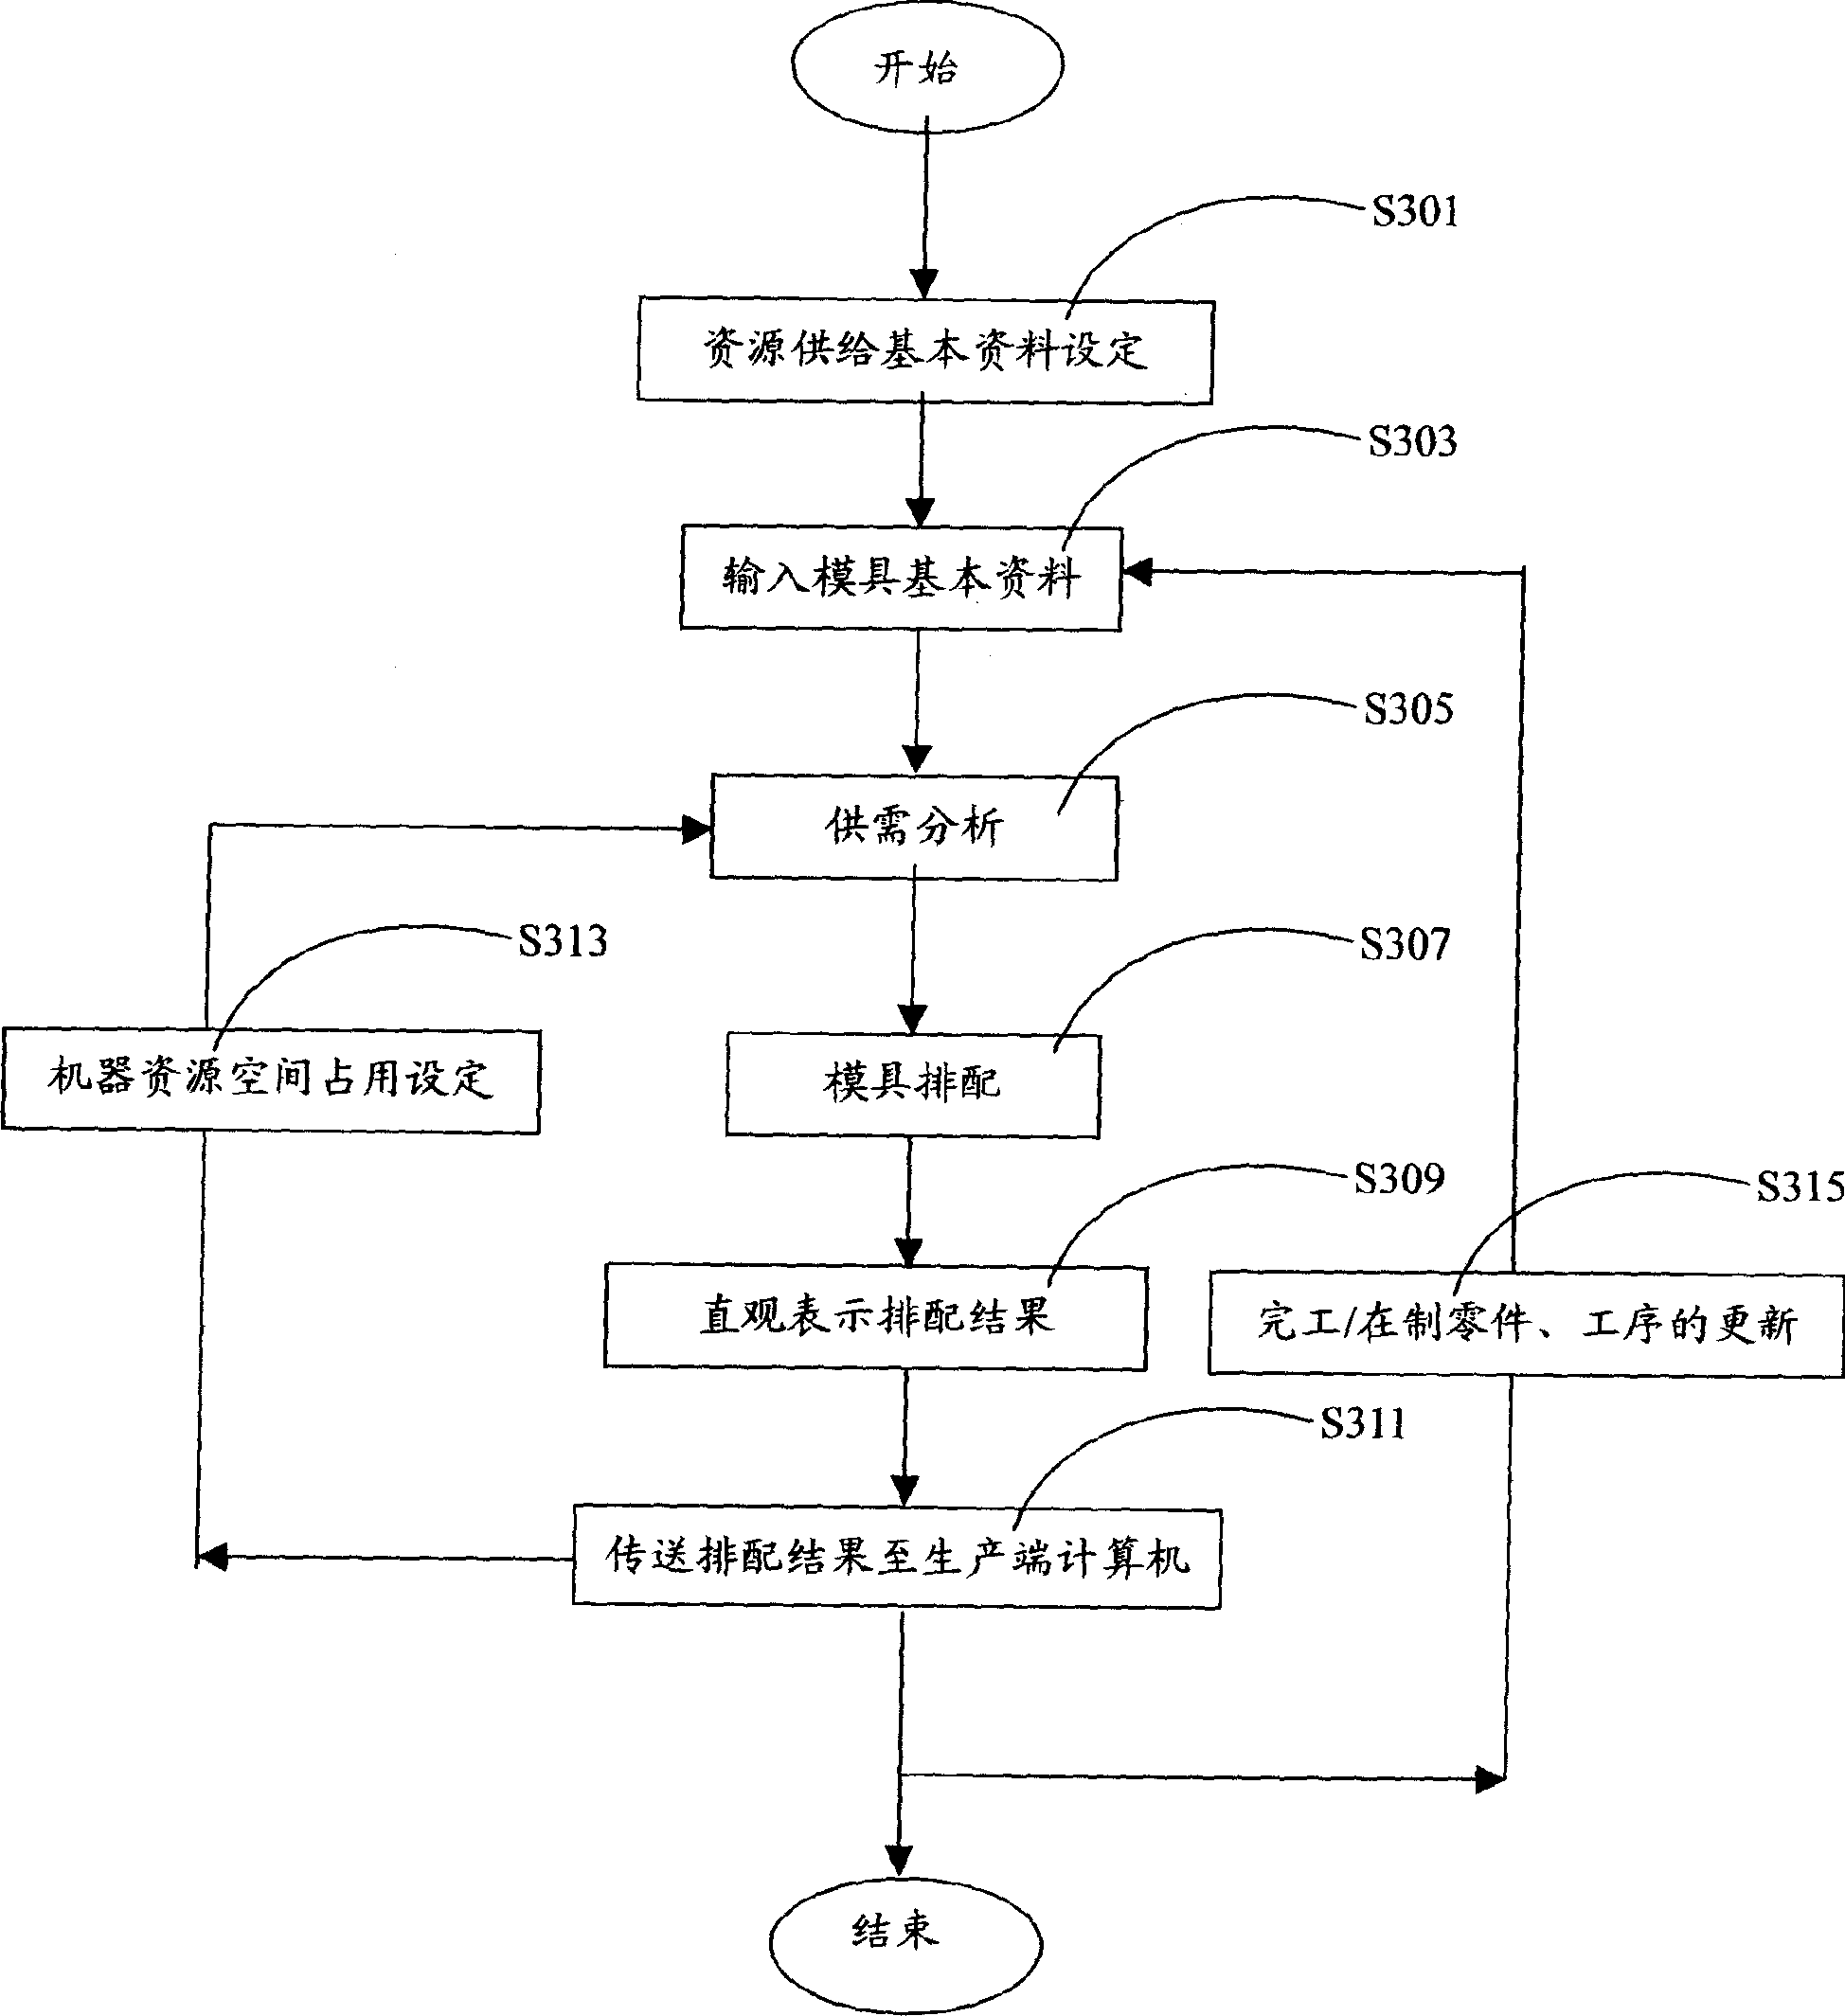 Mould processing order arranging system and method